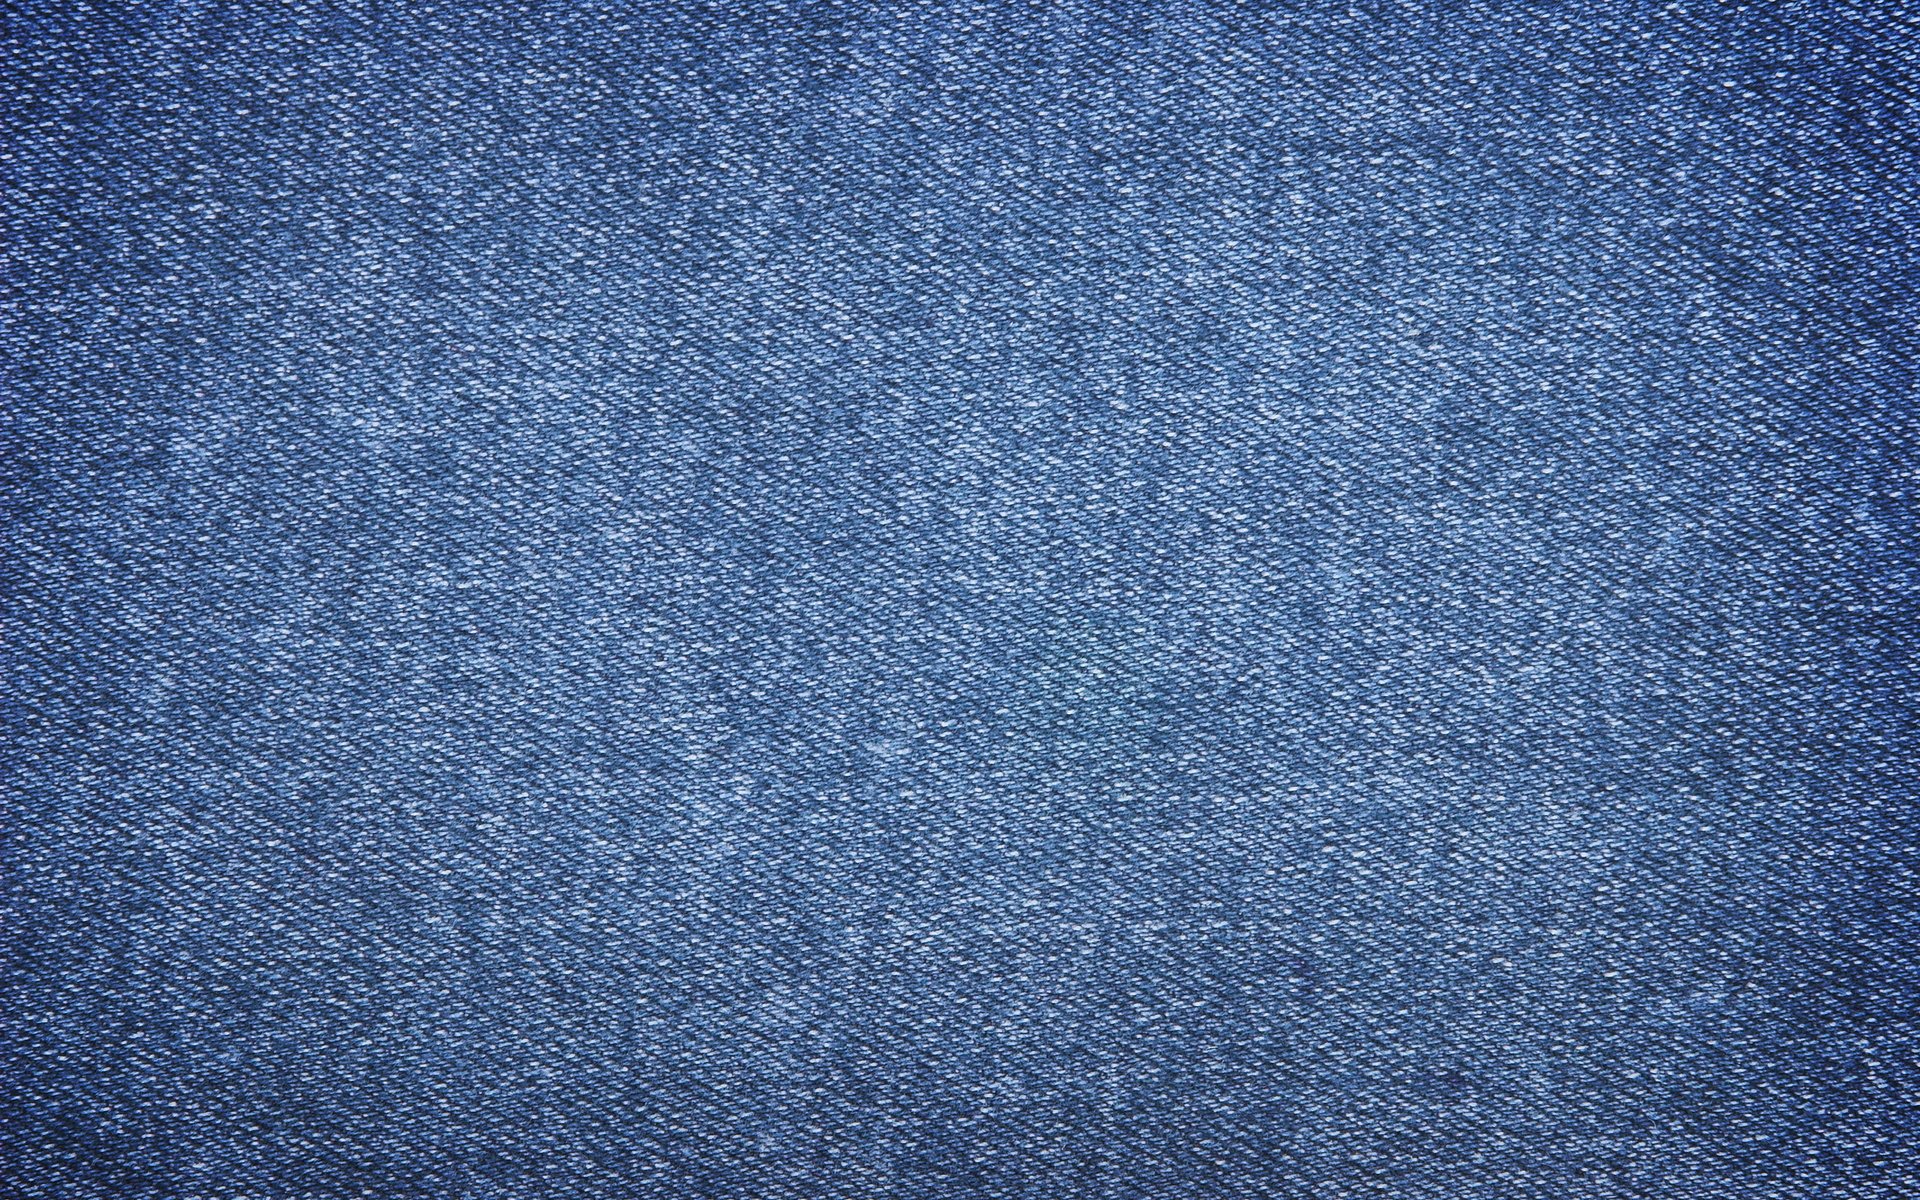 fond d'écran texture hd,bleu,denim,bleu cobalt,bleu électrique,textile